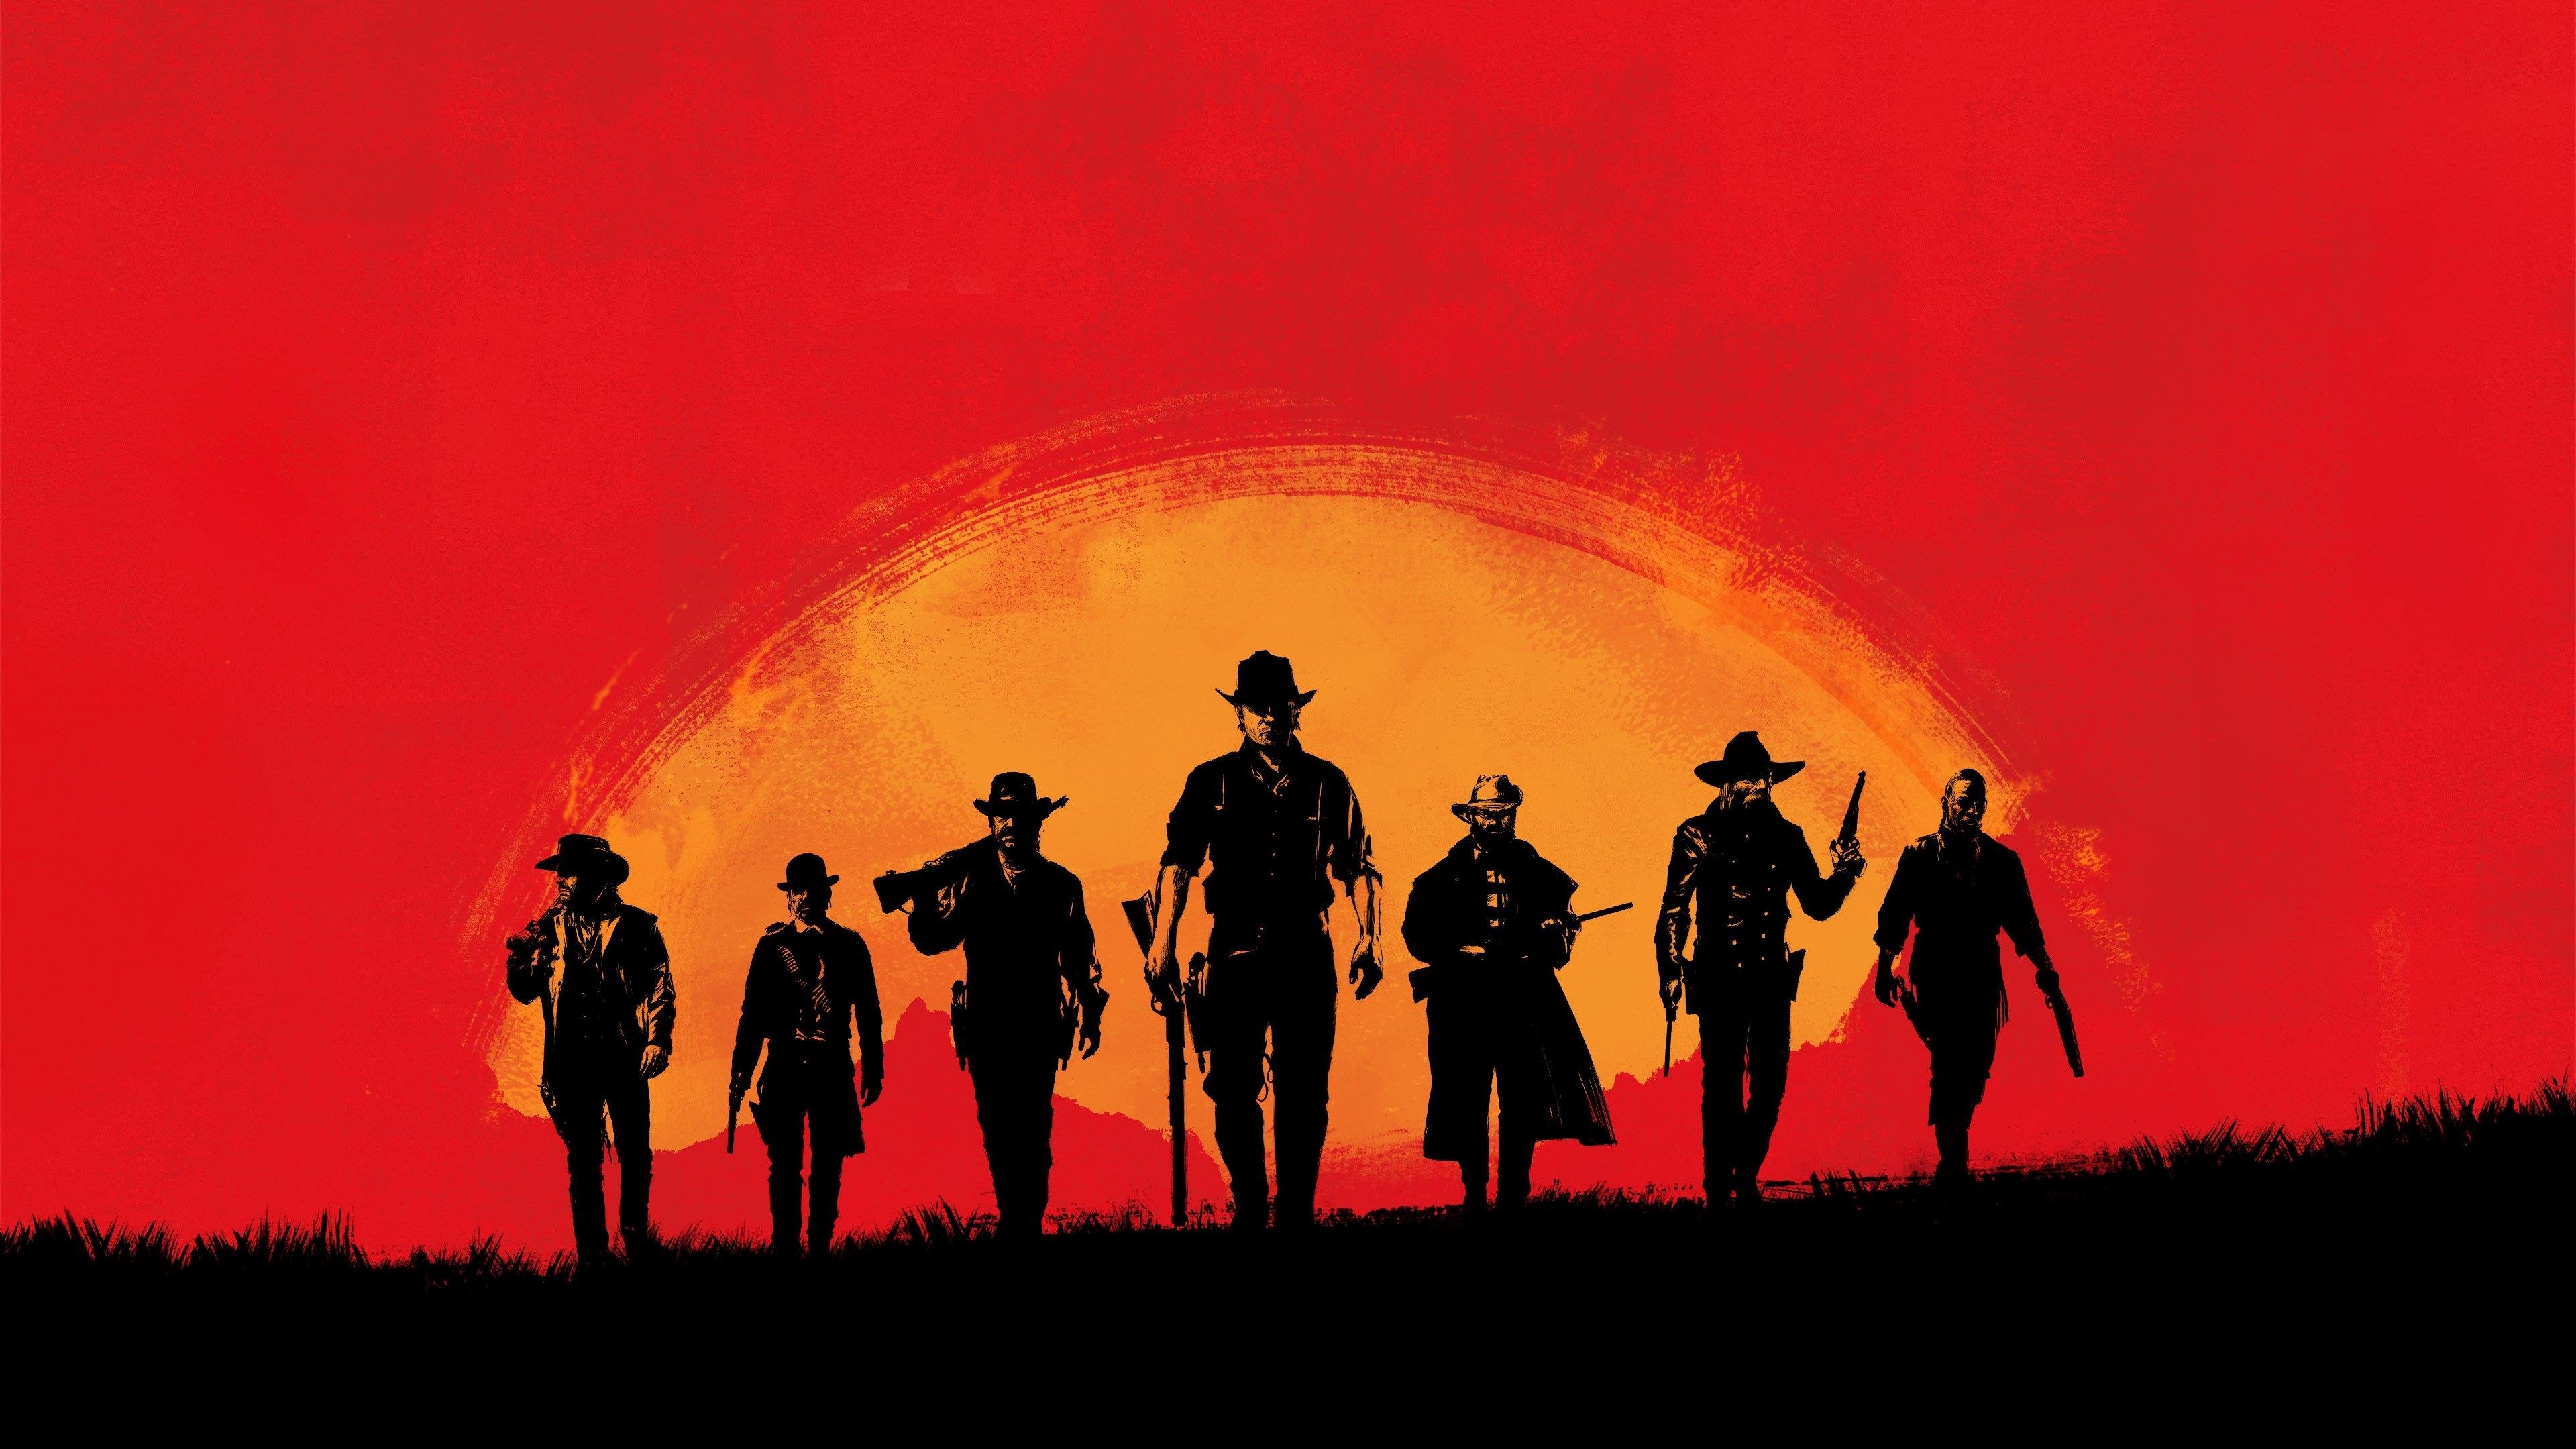 РДР 2. Red Dead Redemption 2 poster. Red Redemption 2. Red Dead Redemption 2 Постер.